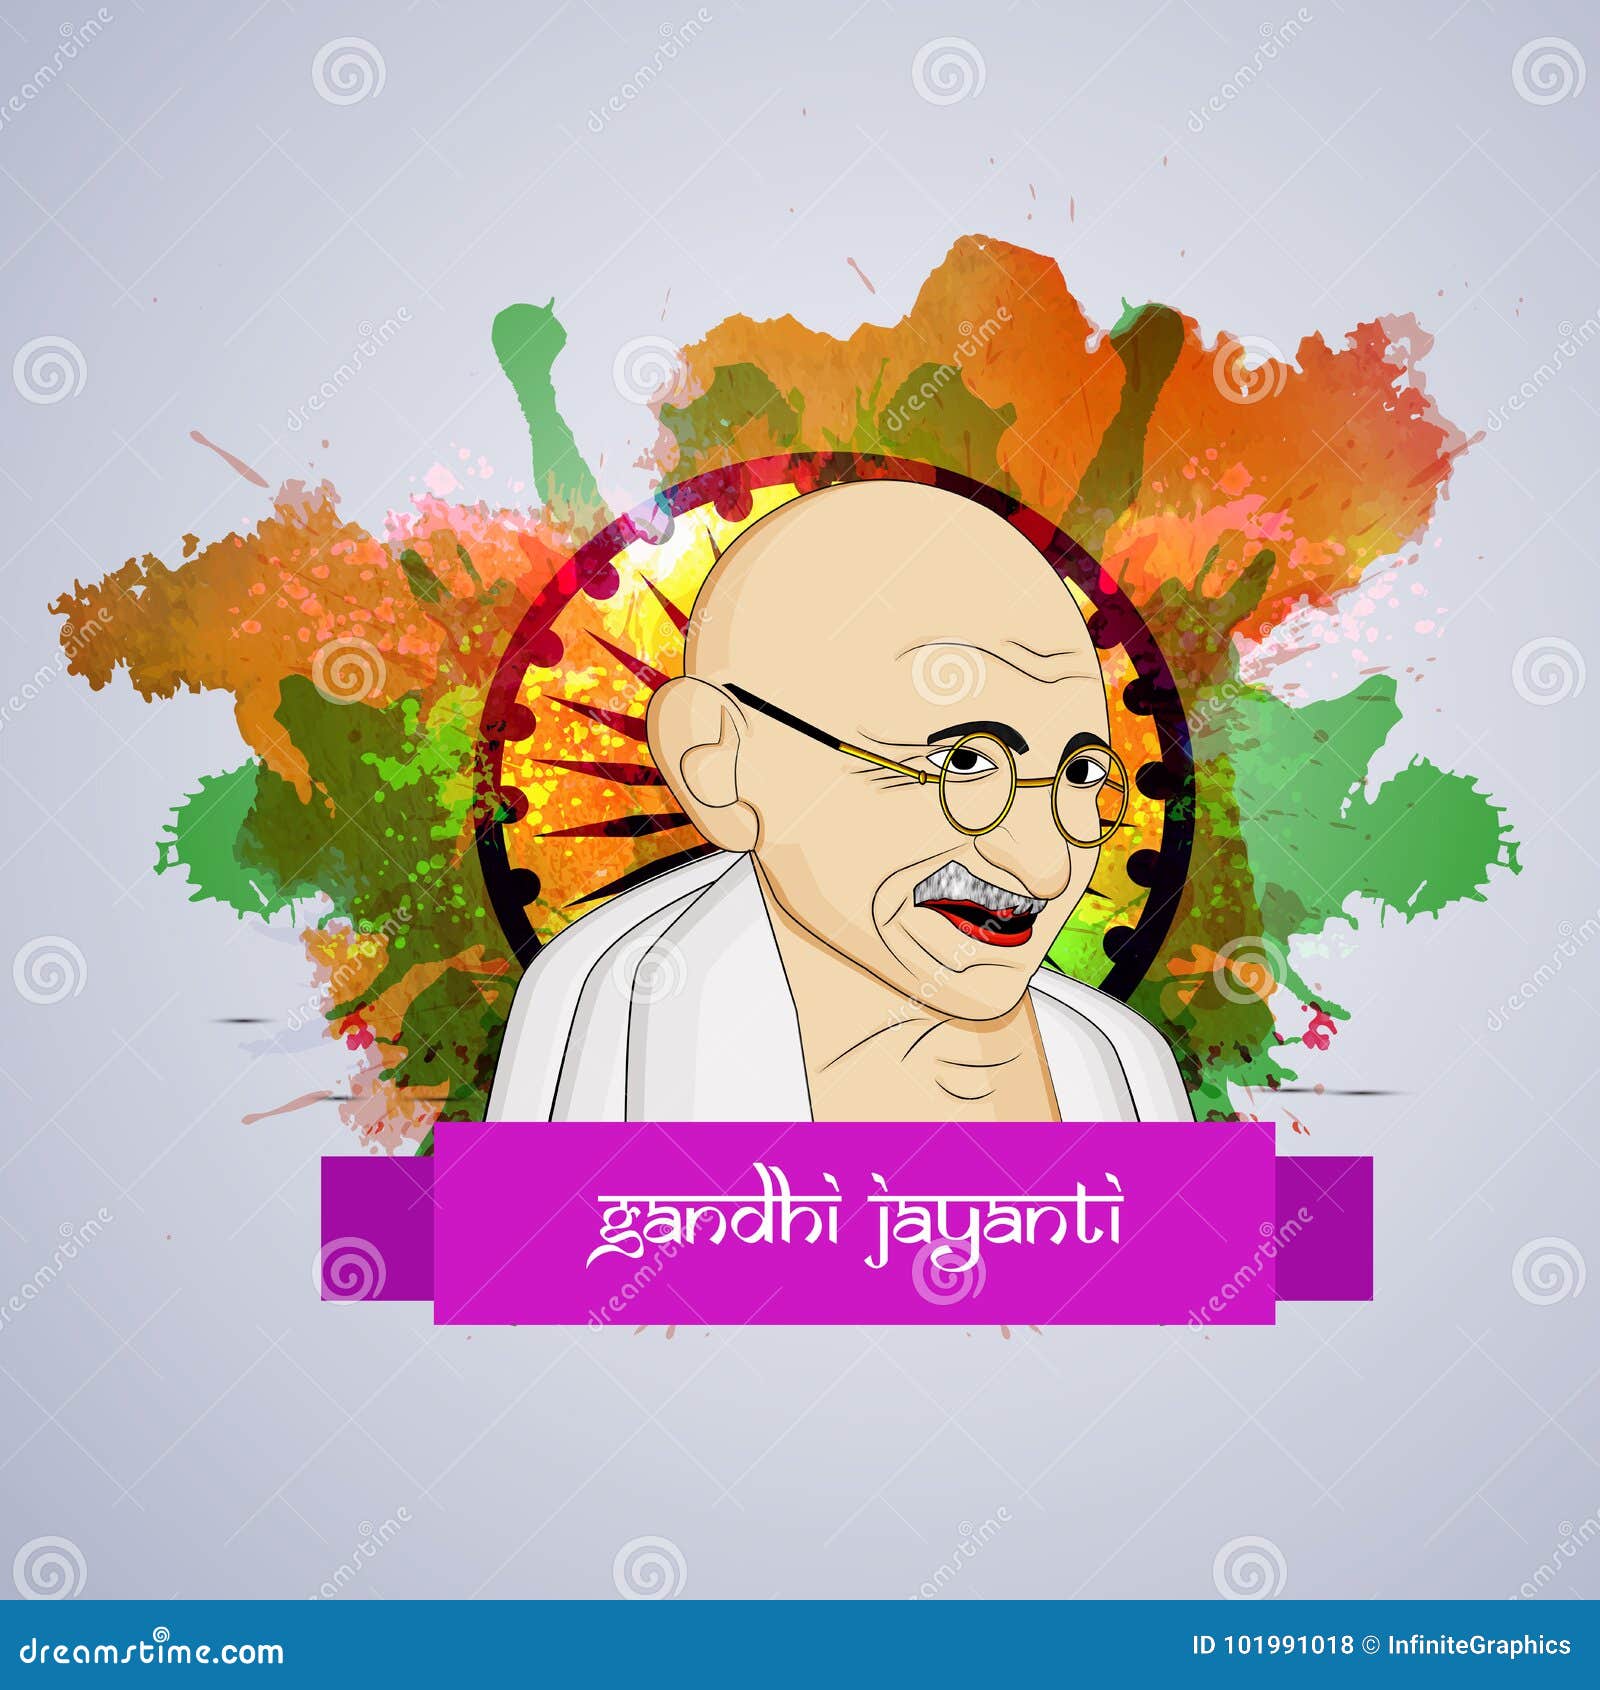 Illustration Of Gandhi Jayanti Background Illustration 101991018 - Megapixl